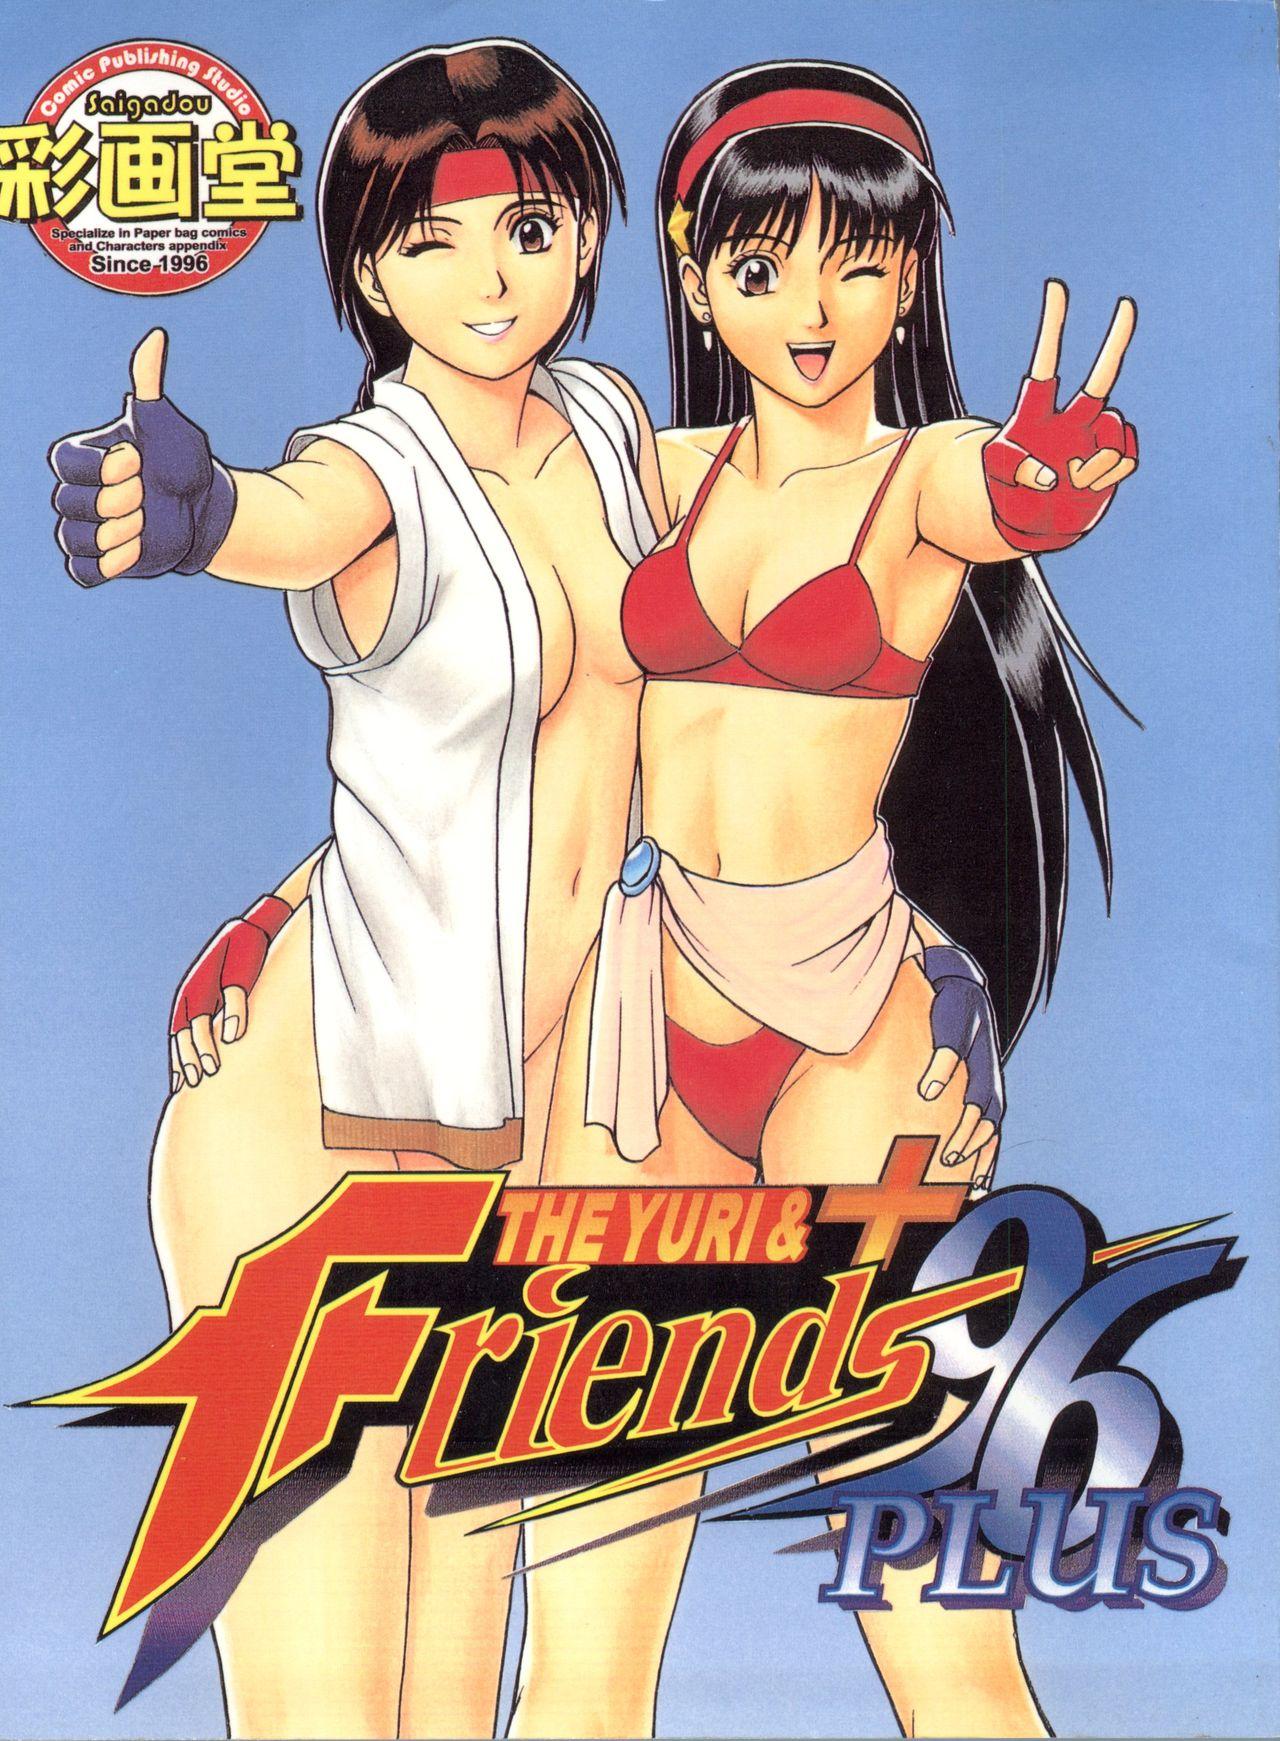 Pauzudo The Yuri&Friends '96 Plus - King of fighters Amante - Picture 1